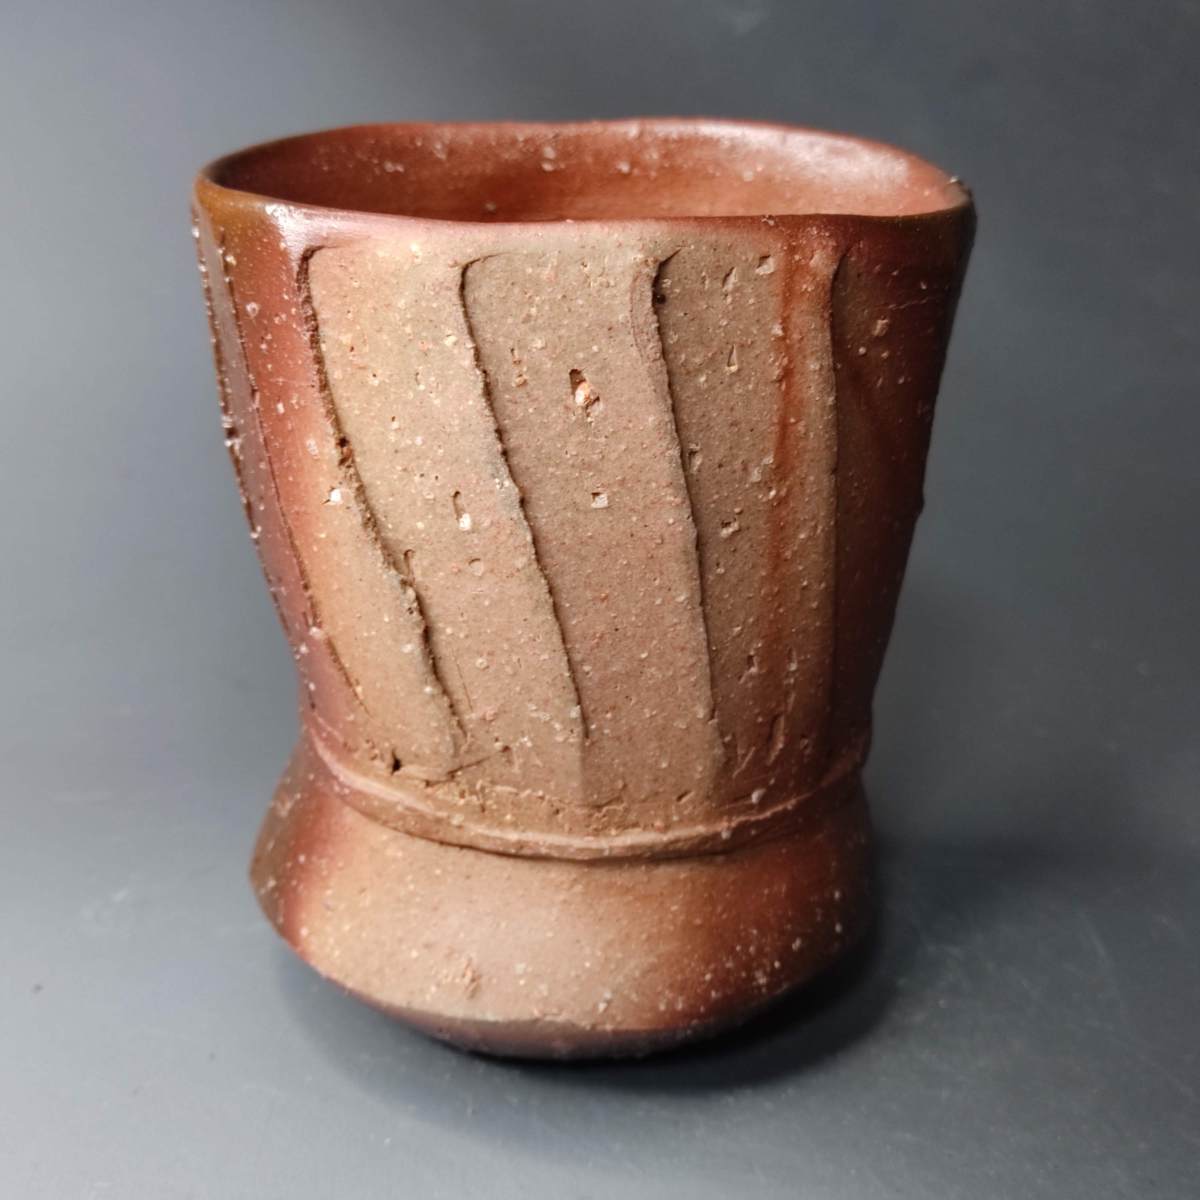 Traditional Japanese Bizen ware, teacup by Masahiko Kondo